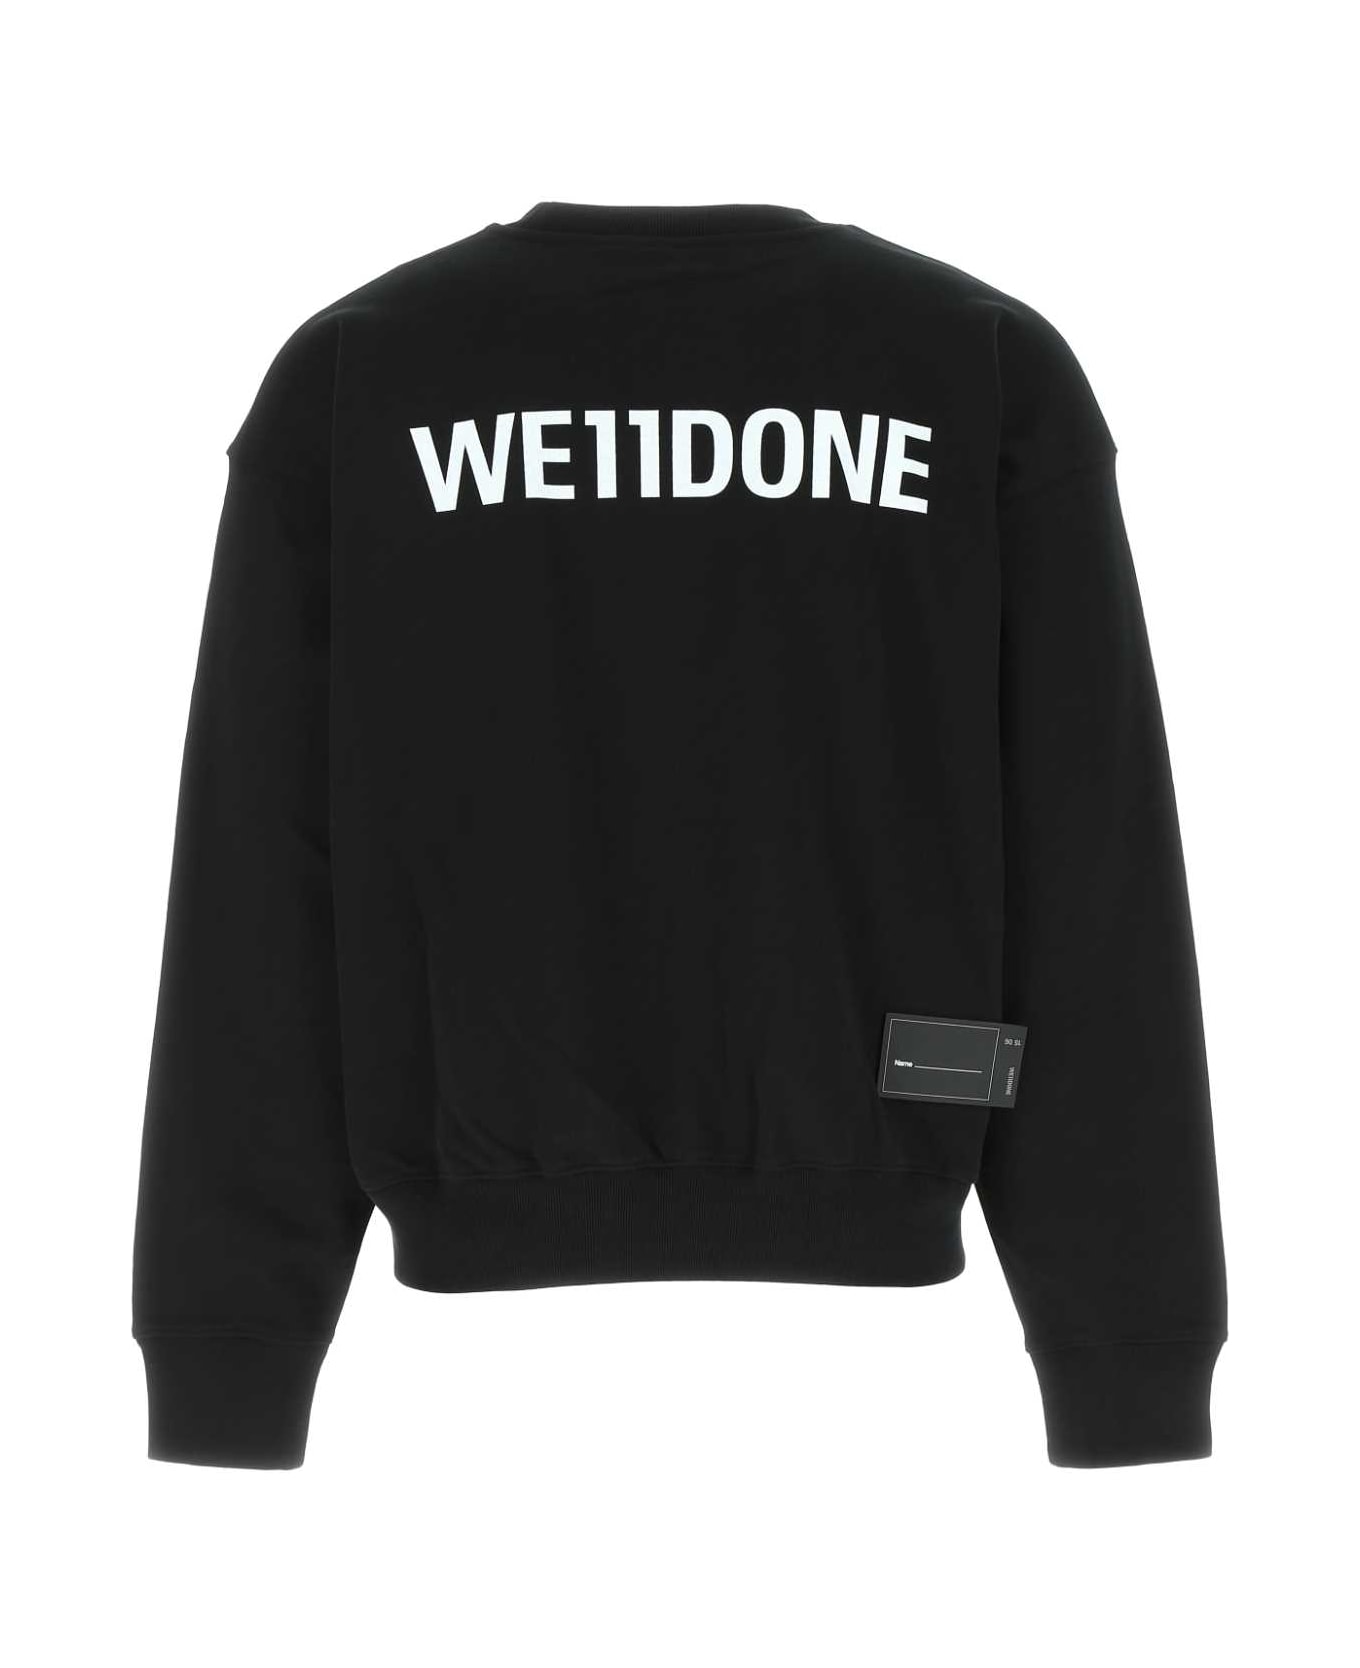 WE11 DONE Black Cotton Oversize Sweatshirt - BK フリース